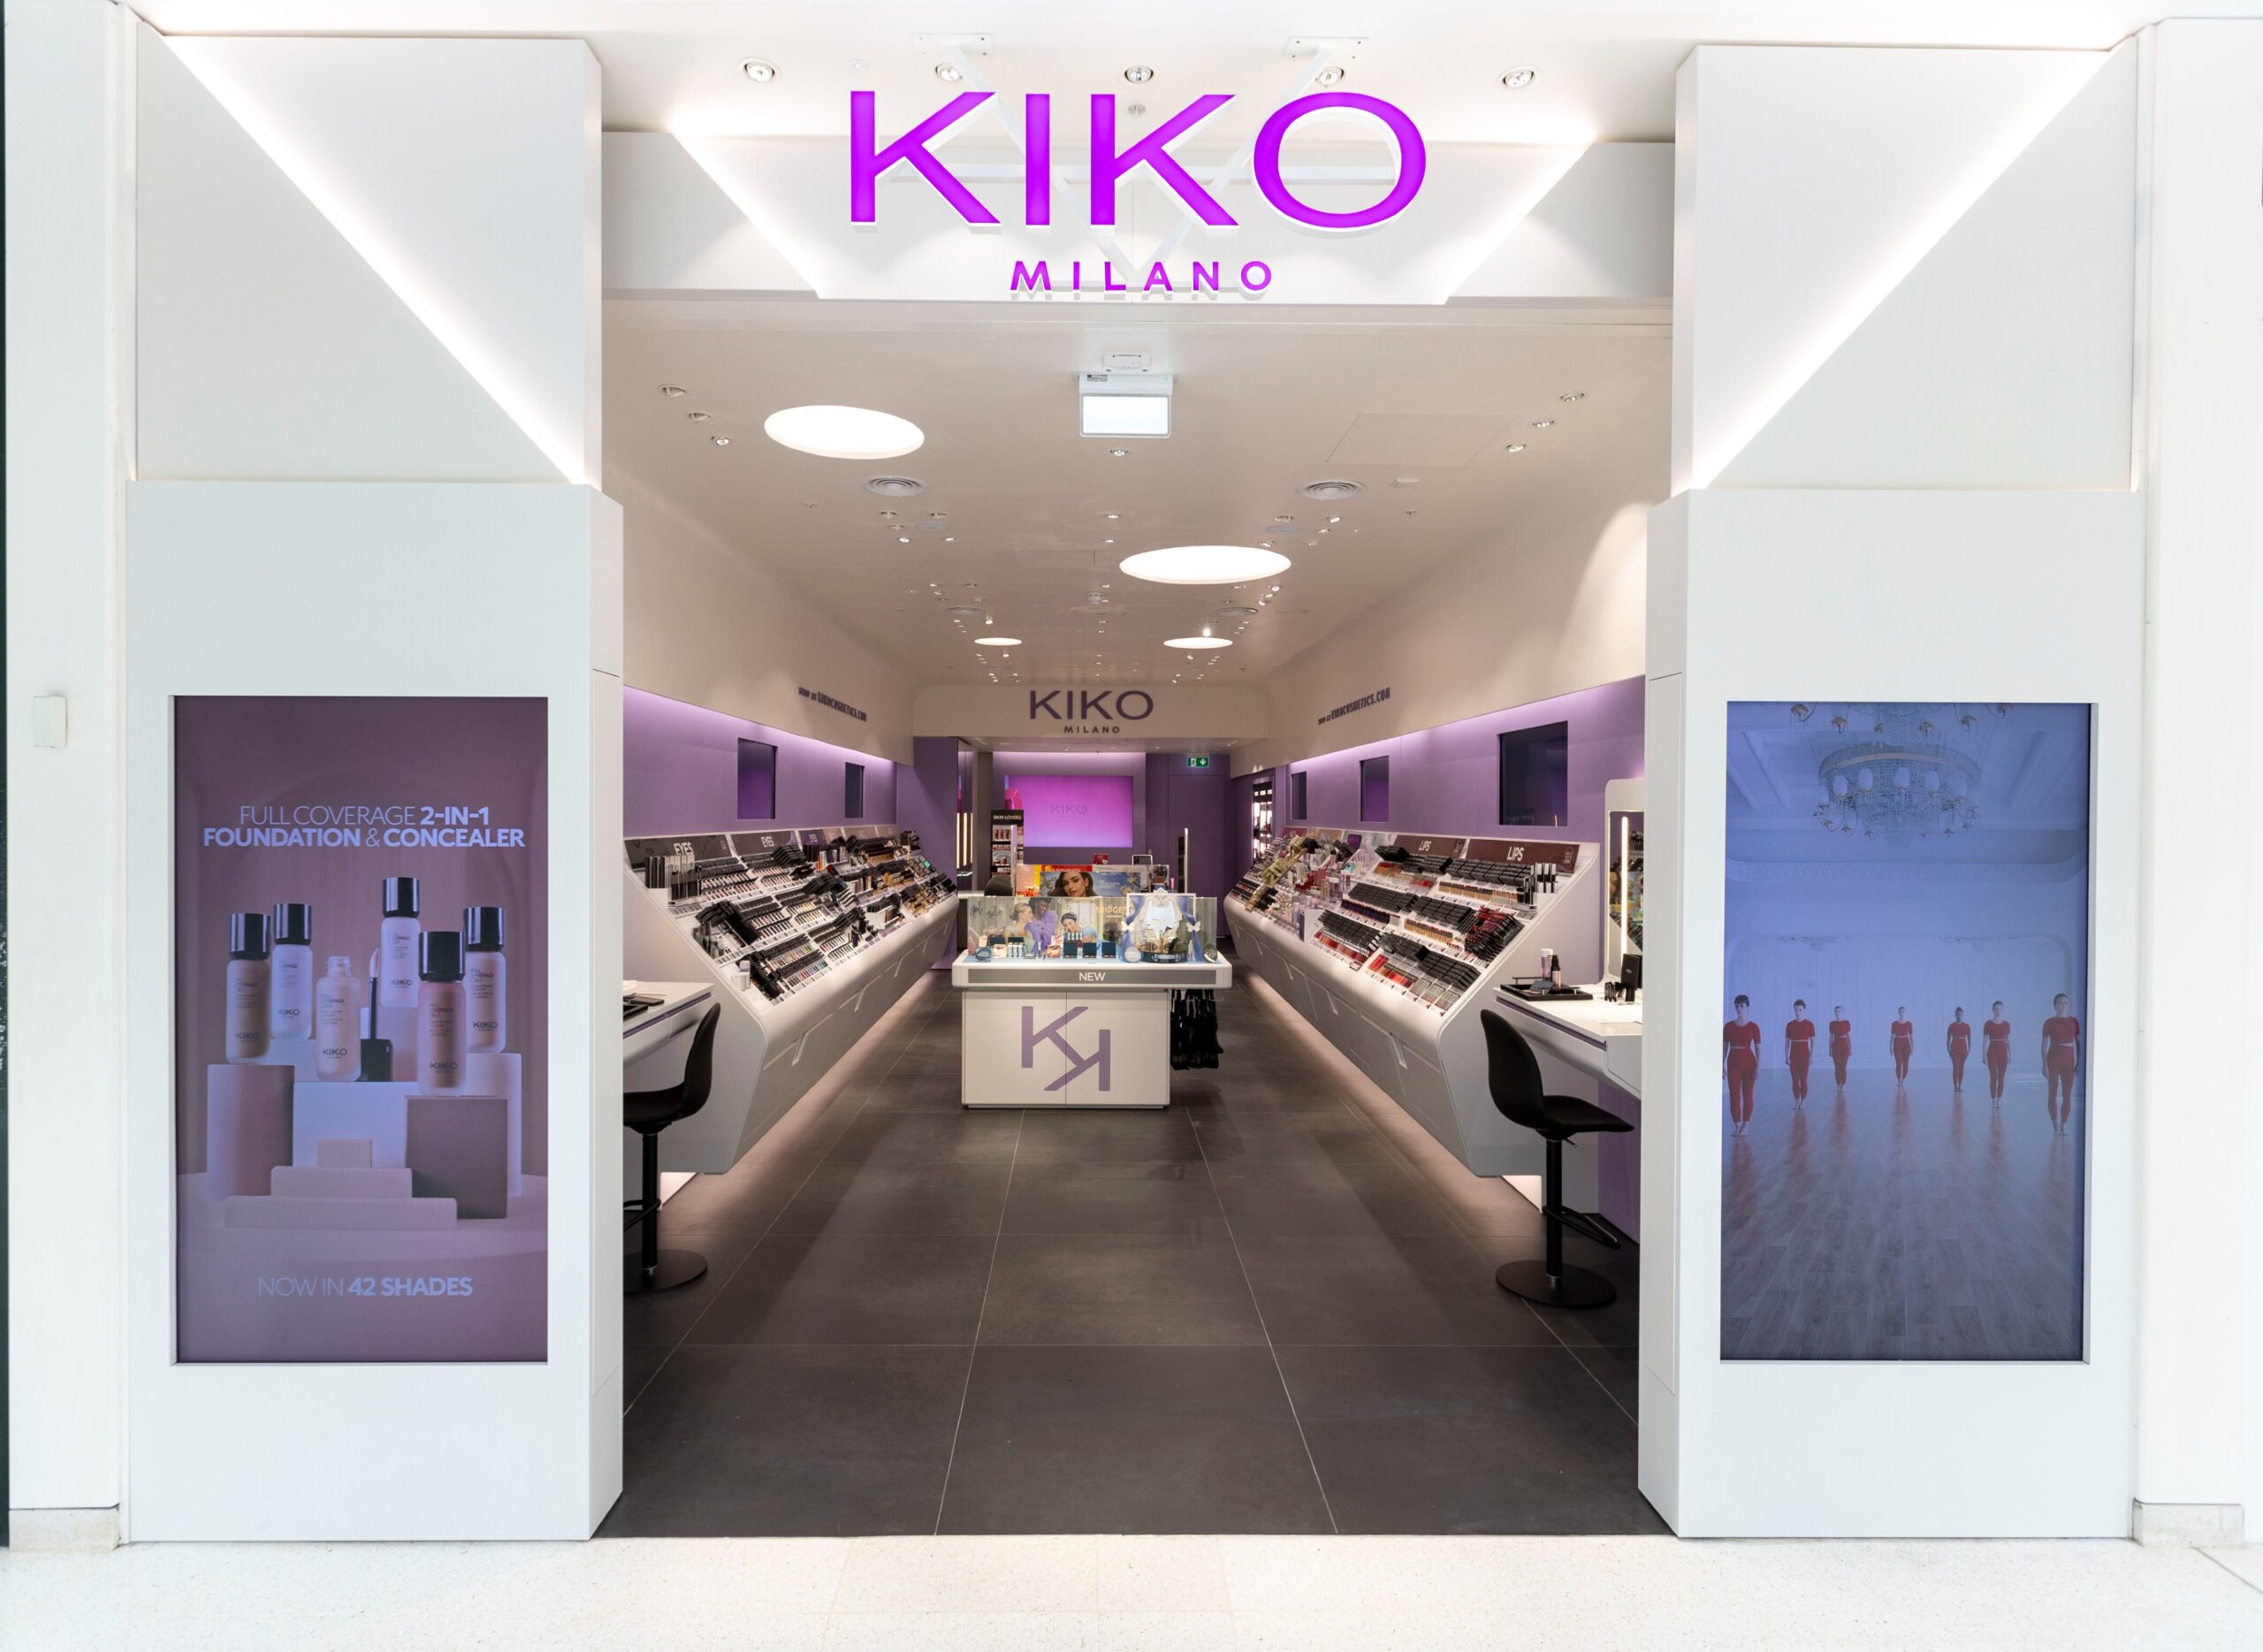 KIKO Milano opens its doors at Braehead